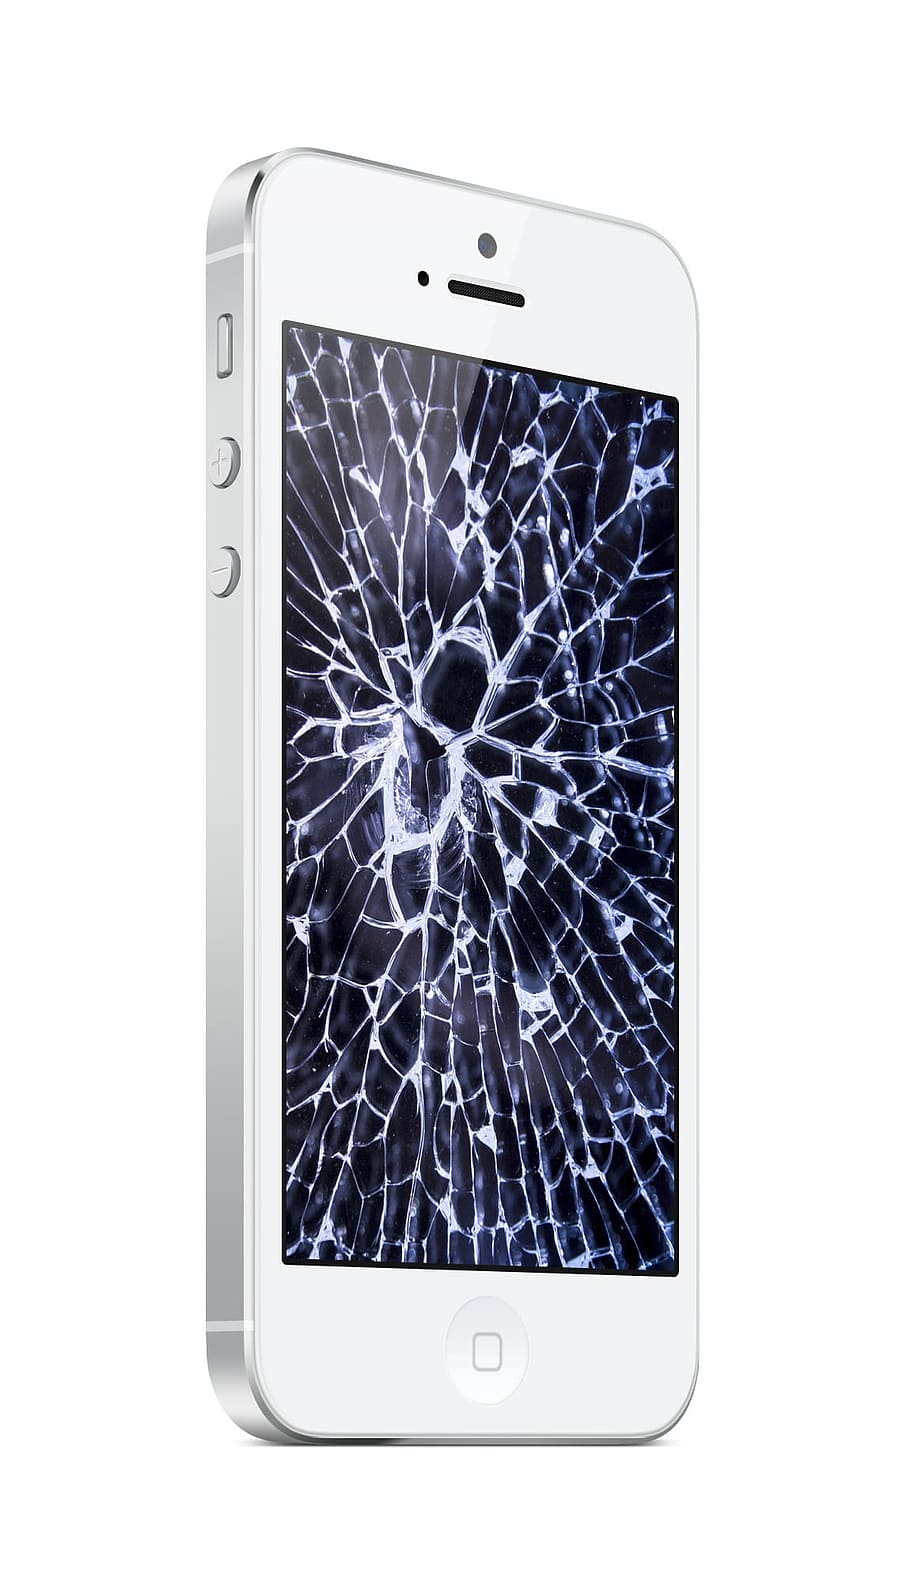 Hd Wallpaper Broken White Iphone 5 Broken Screen Mobile Technology Wireless Technology Wallpaper Flare